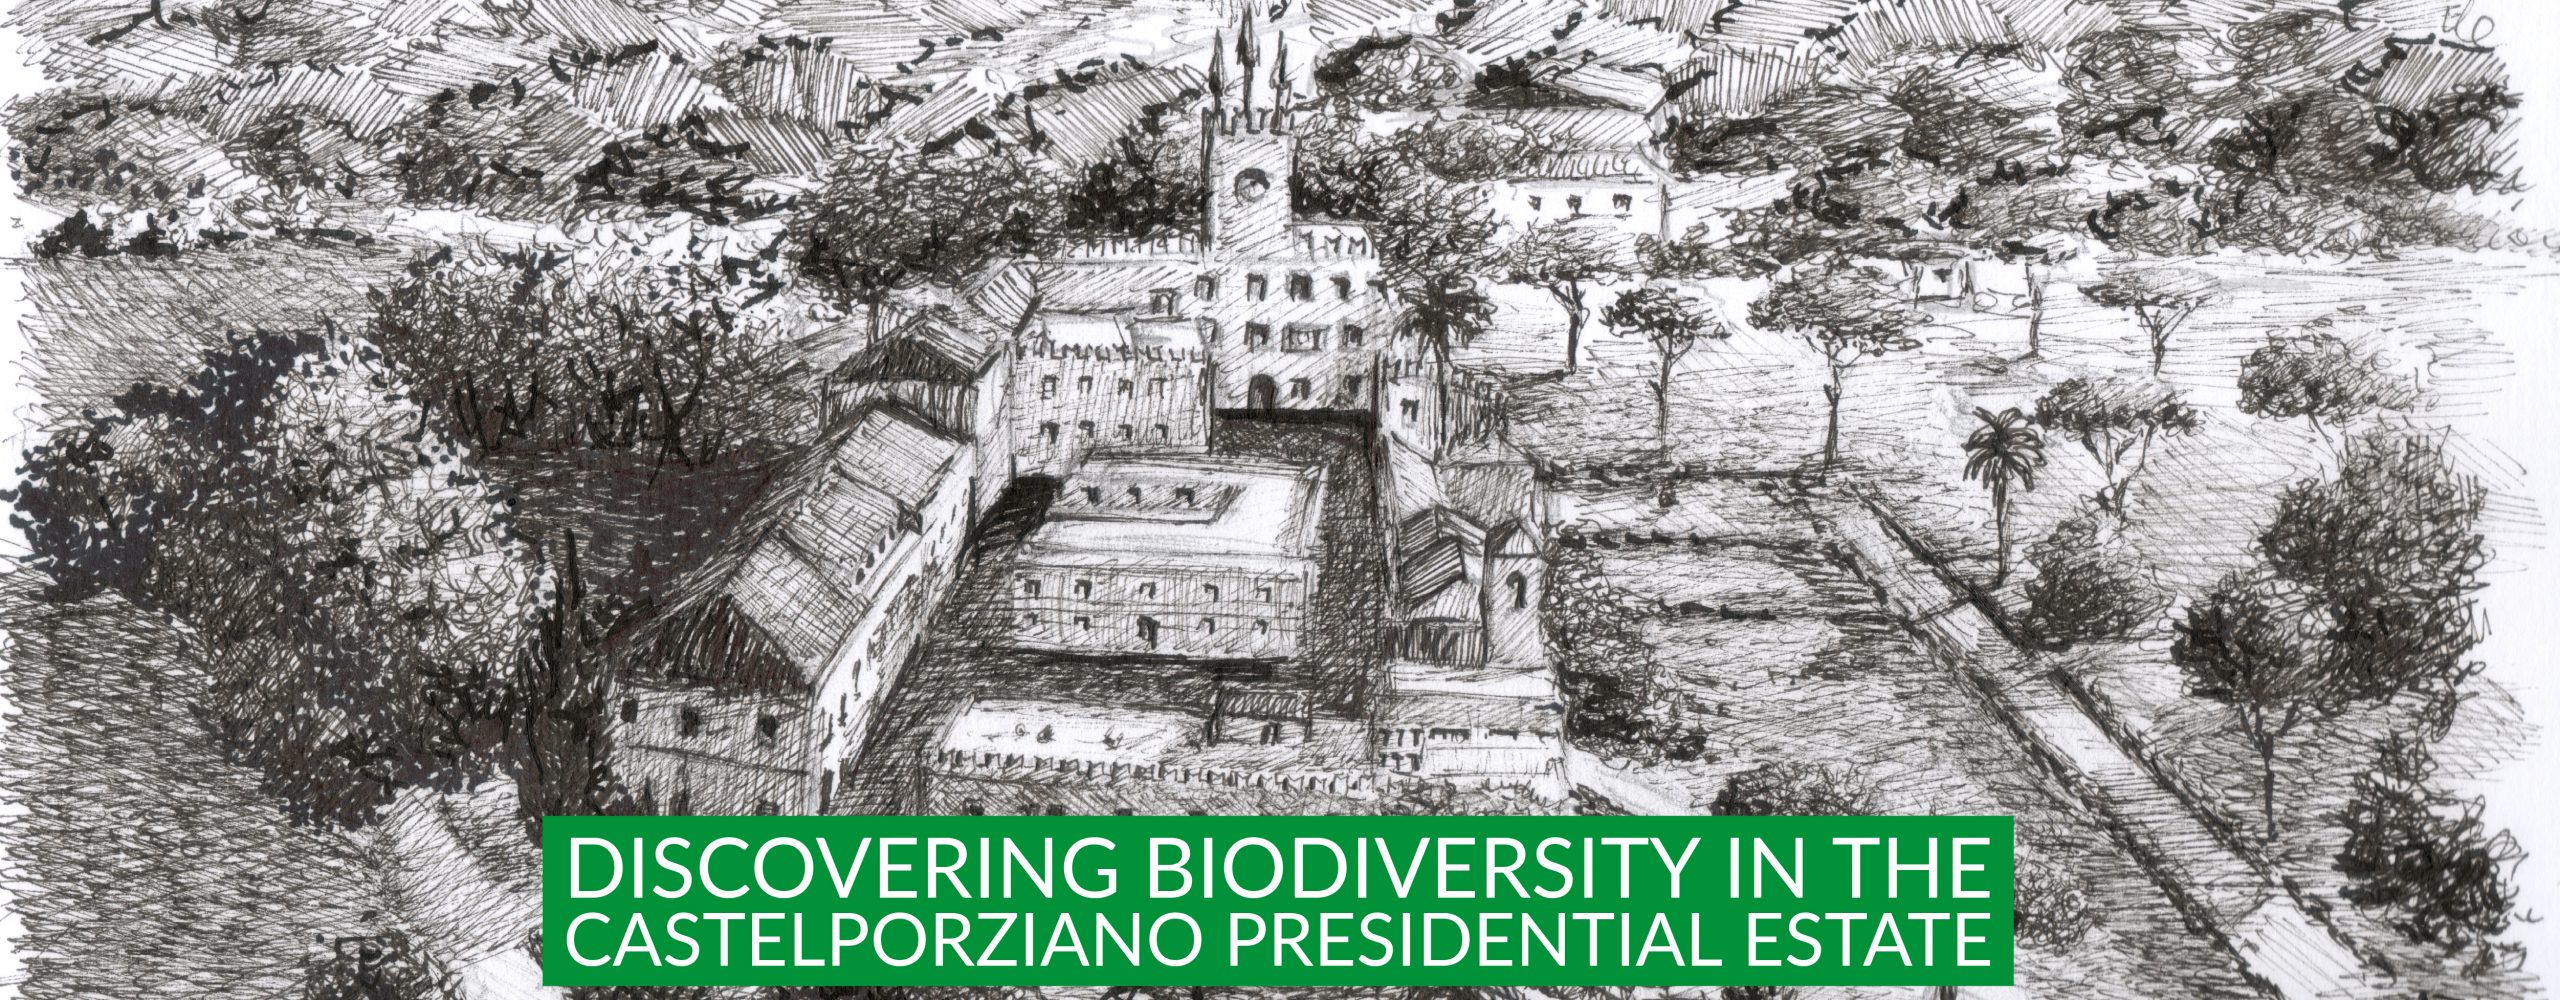 Discovering Biodiversity in Castelporziano Presidential